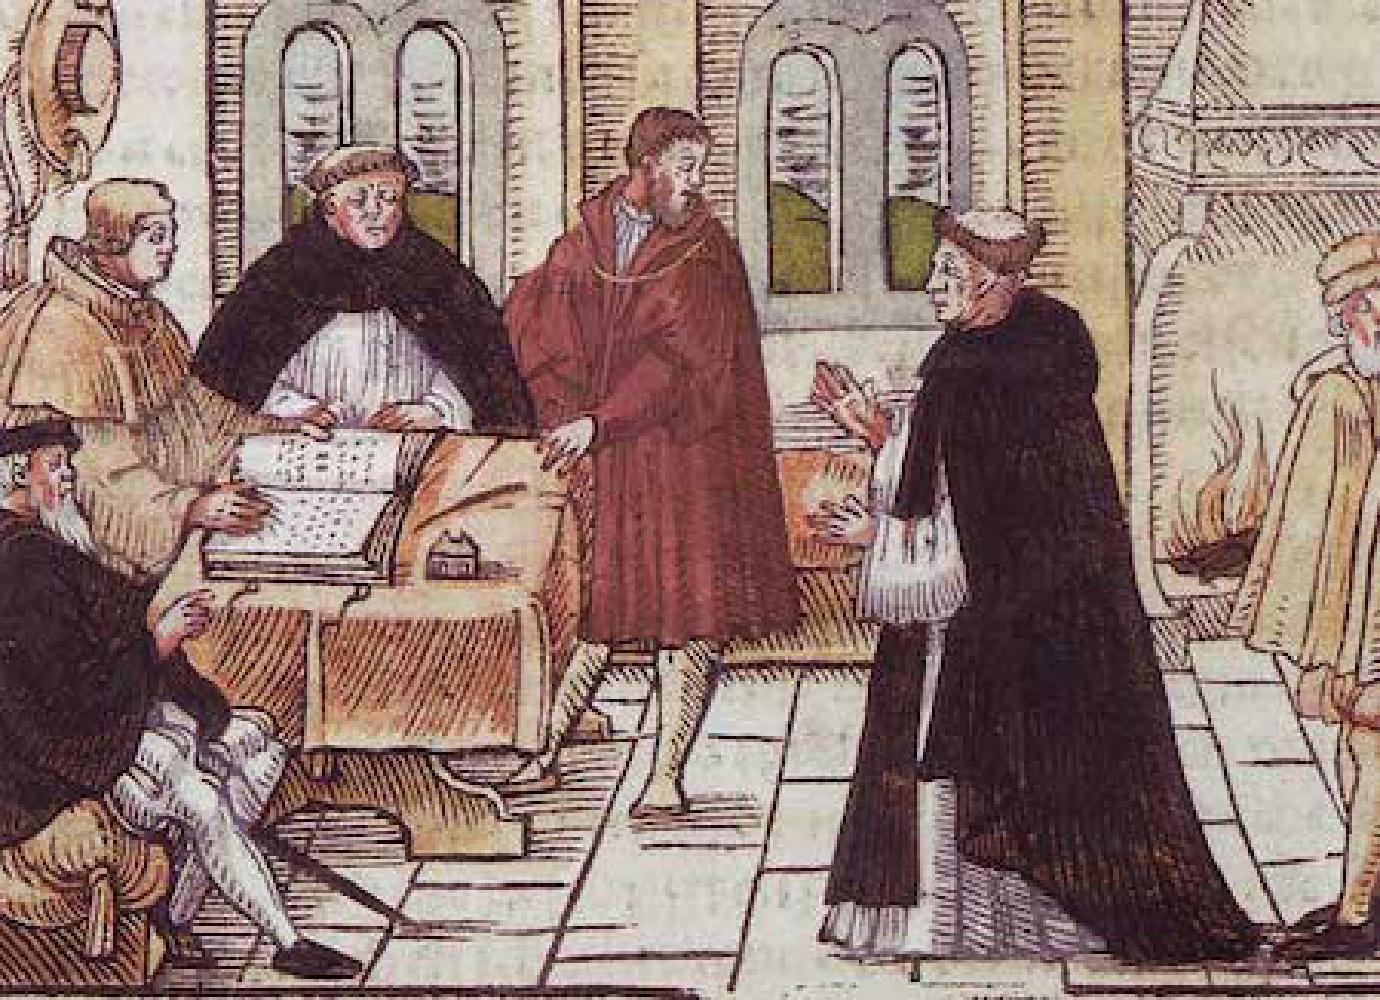 
Martin Luther discussing with Cardinal Cajetan.
